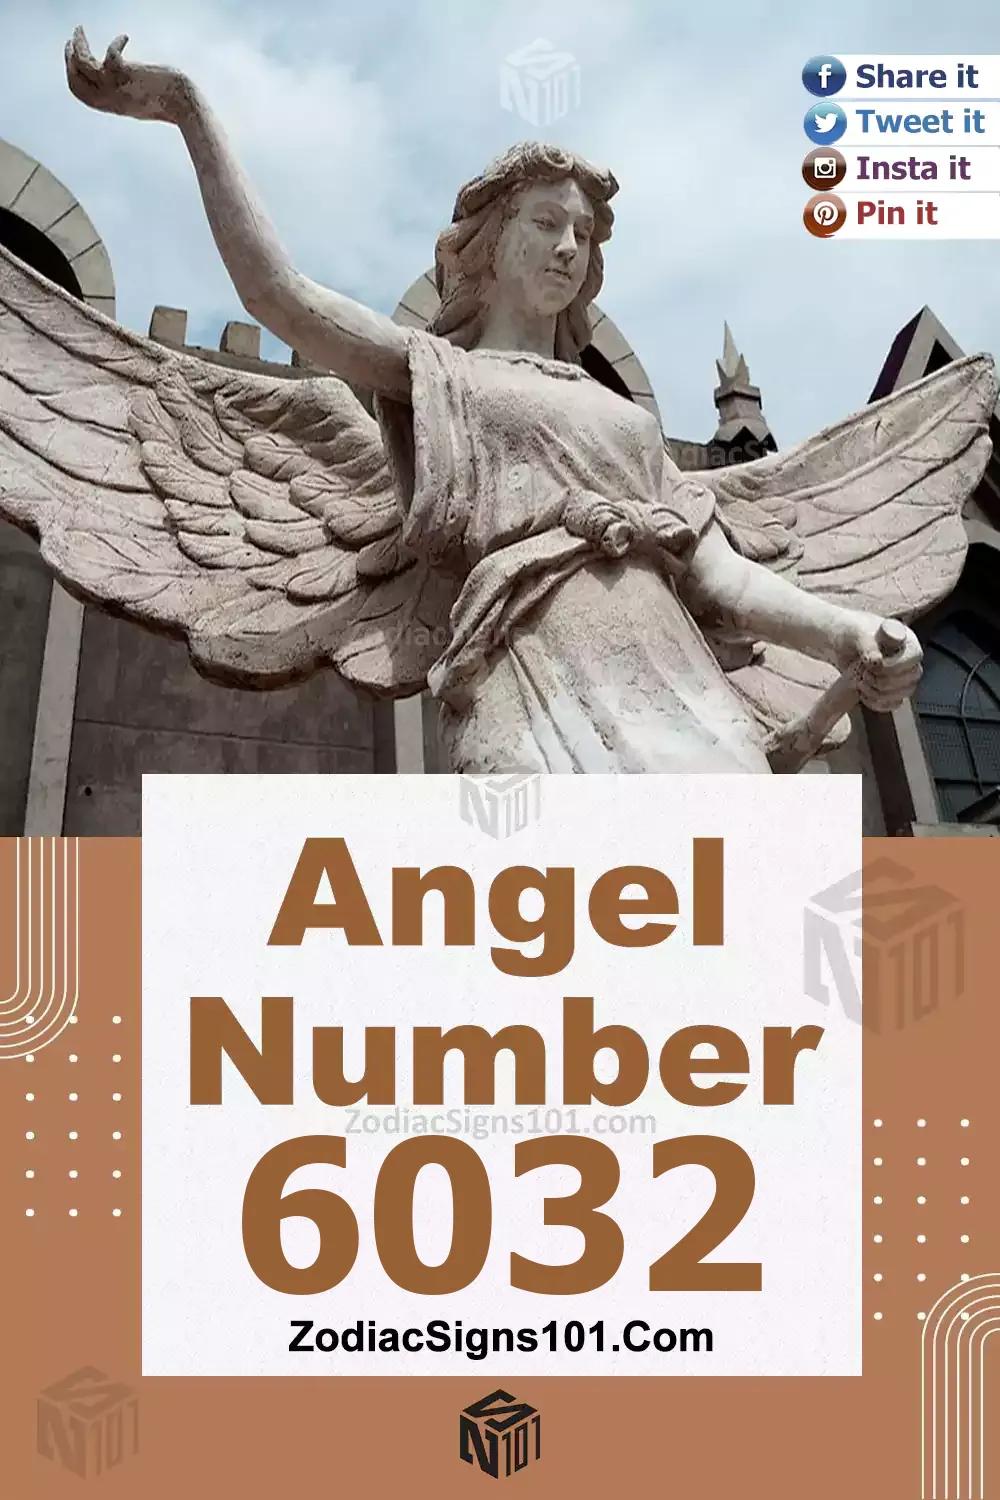 6032-Angel-Number-Meaning.jpg